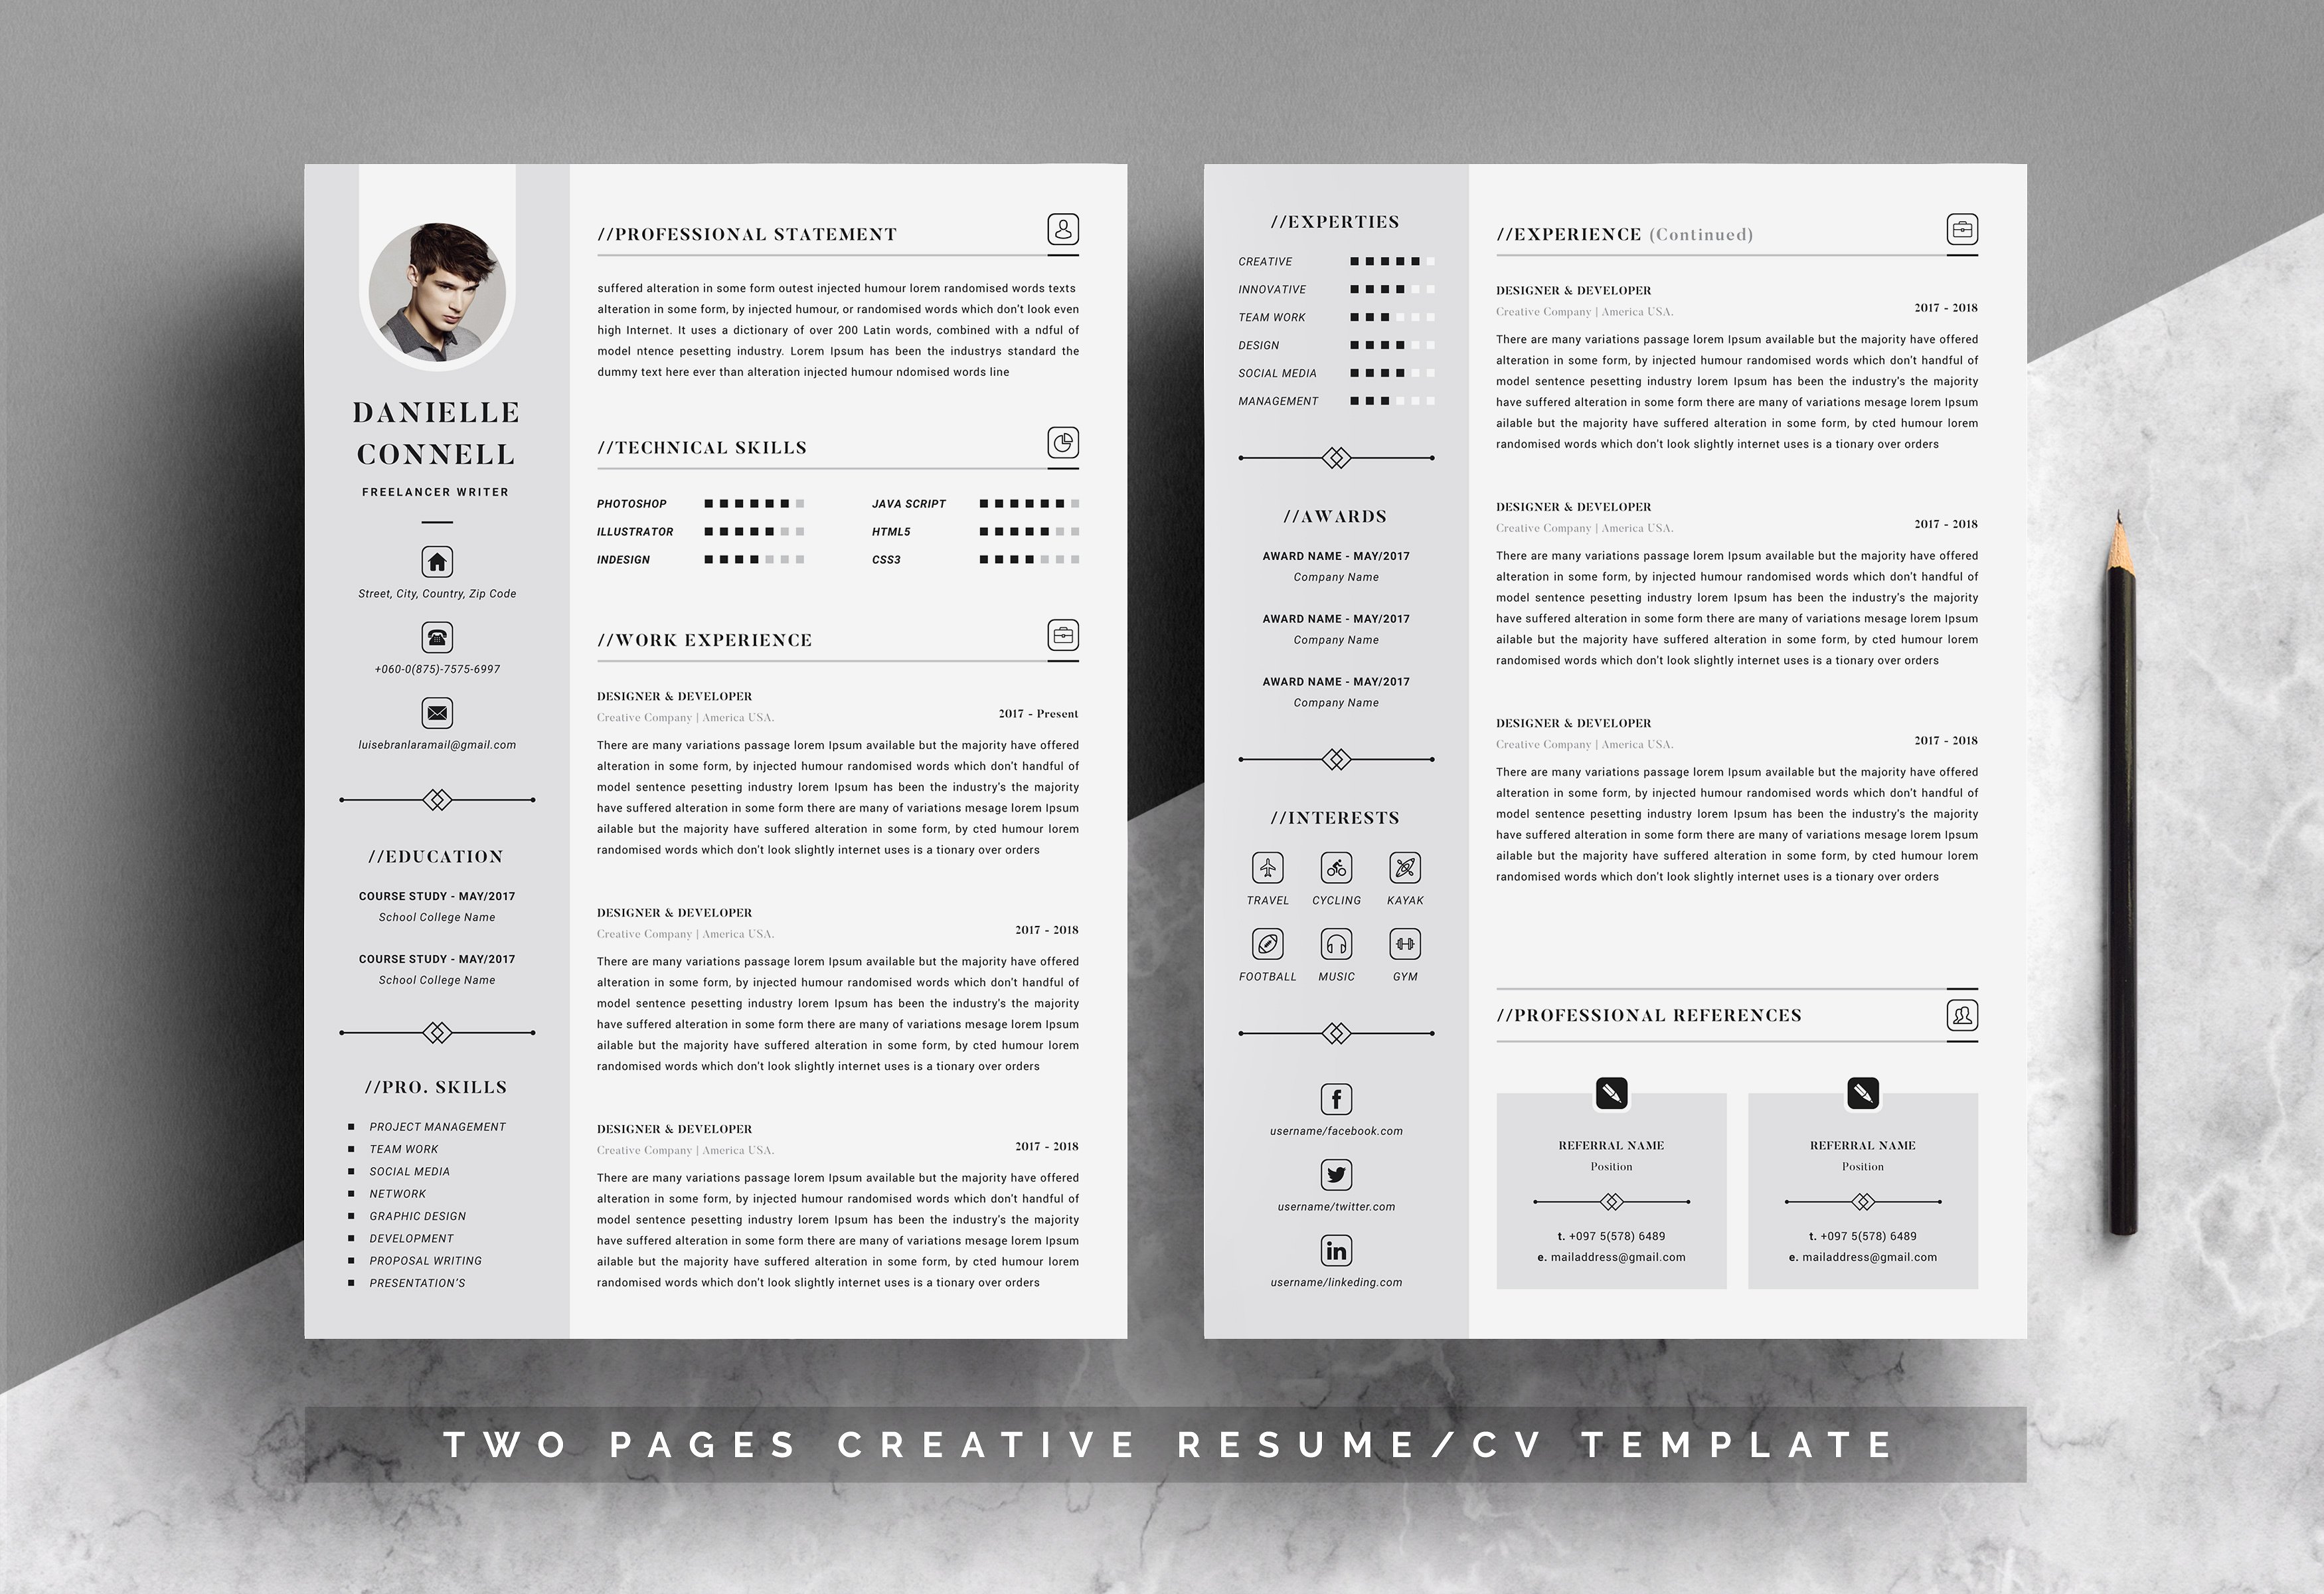 个人电子版求职简历模板 Creative Resume Template 4 Pages插图(1)